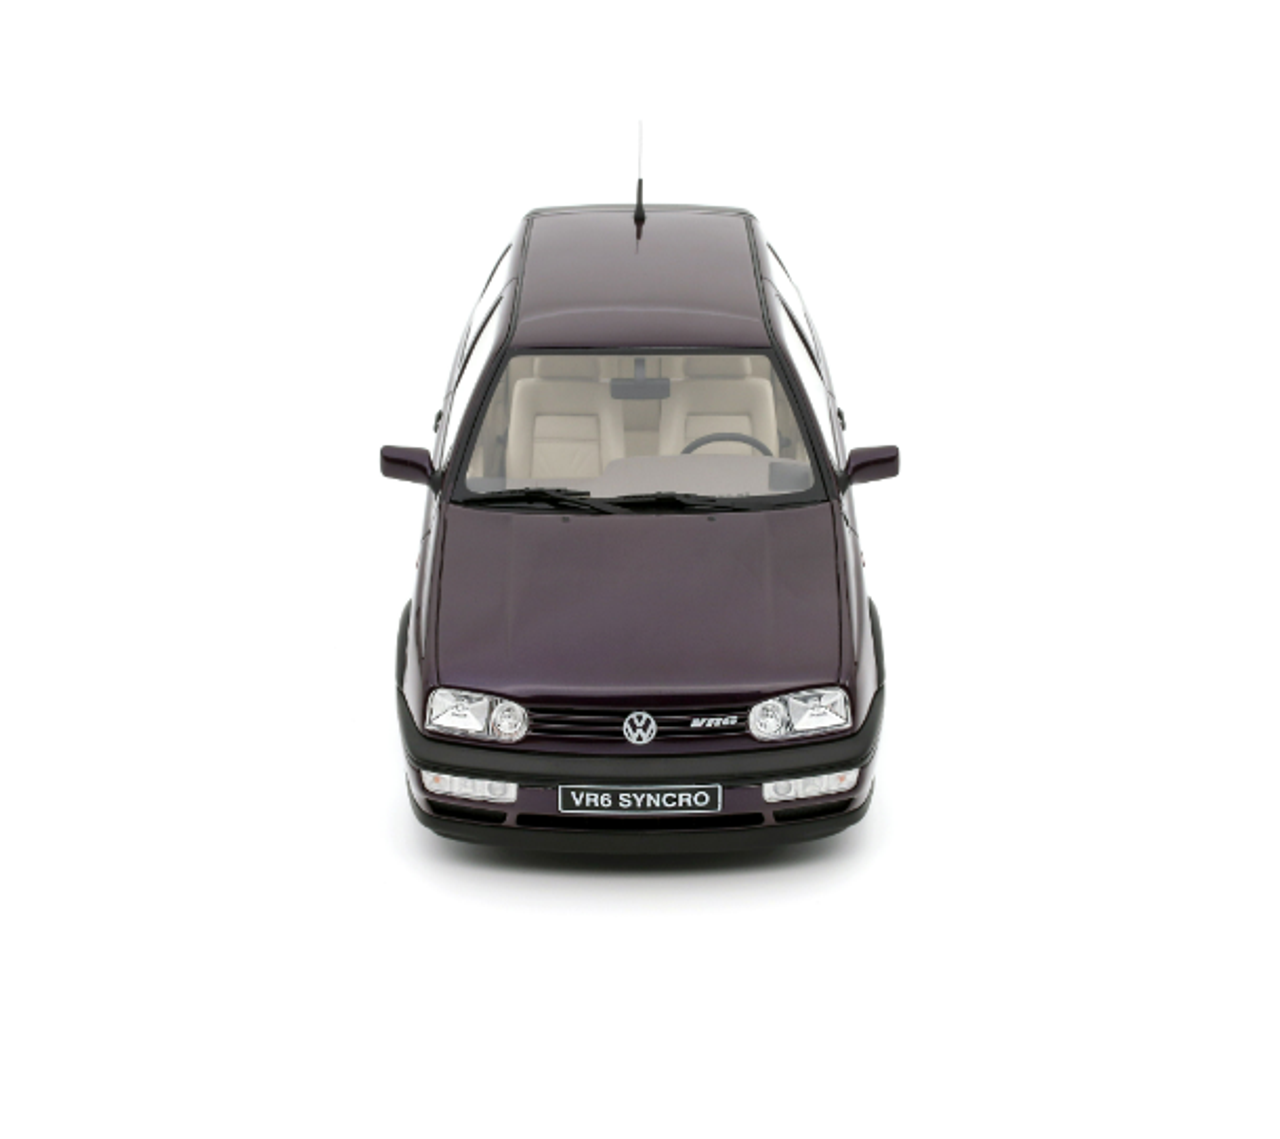 1/18 OTTO 1995 Volkswagen VW Golf III 3 VR6 Syncro (Purple) Car Model